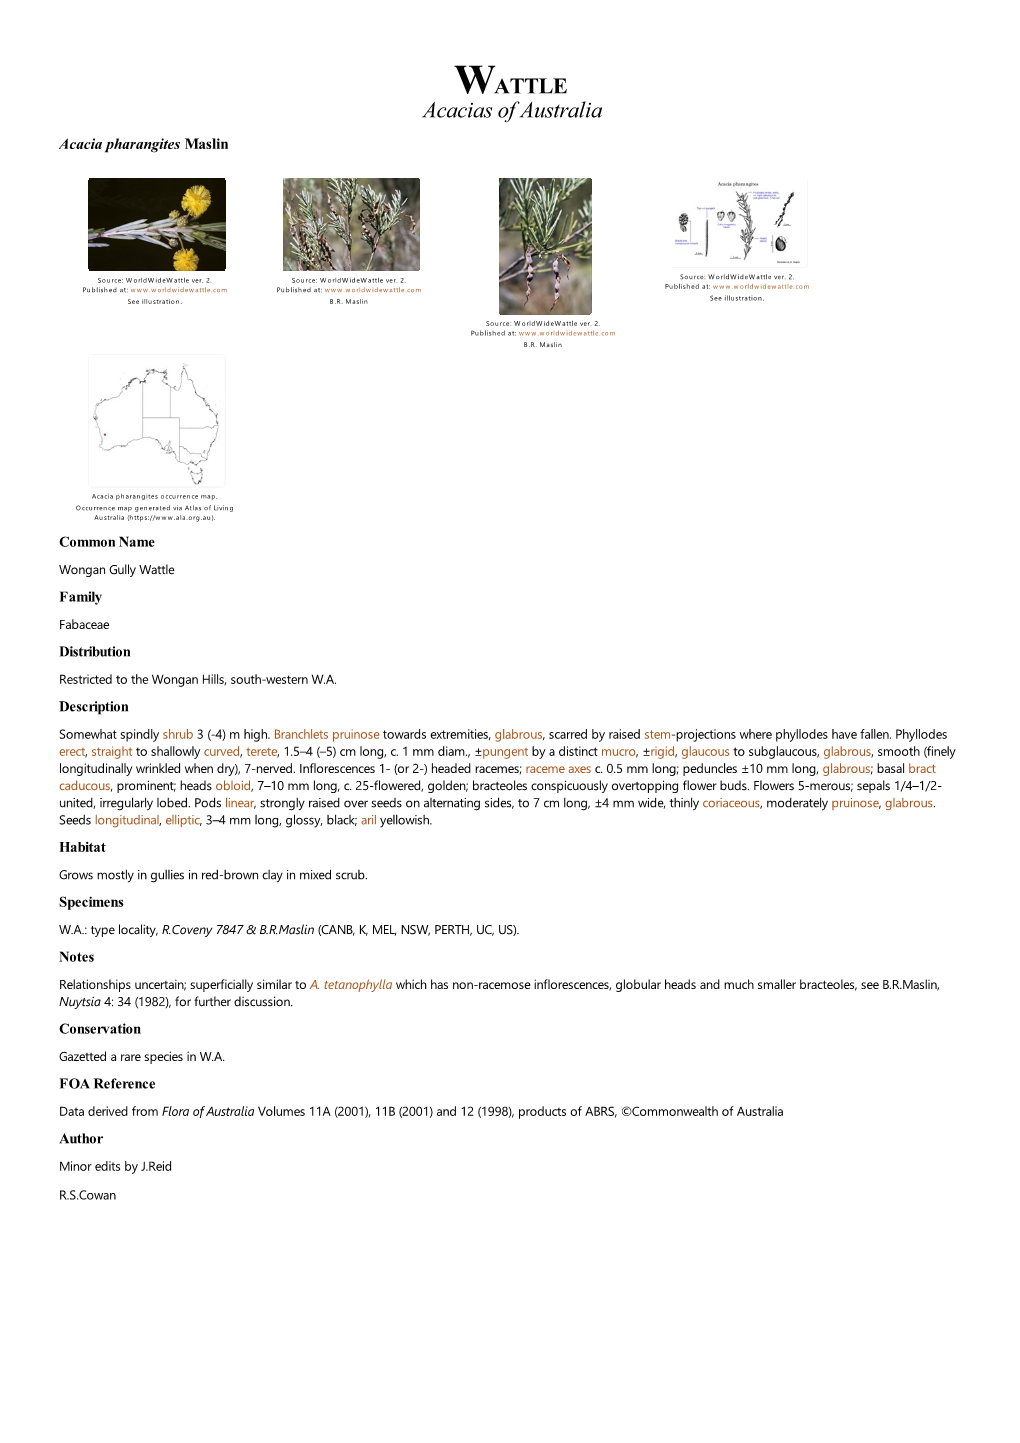 Acacia Pharangites Maslin